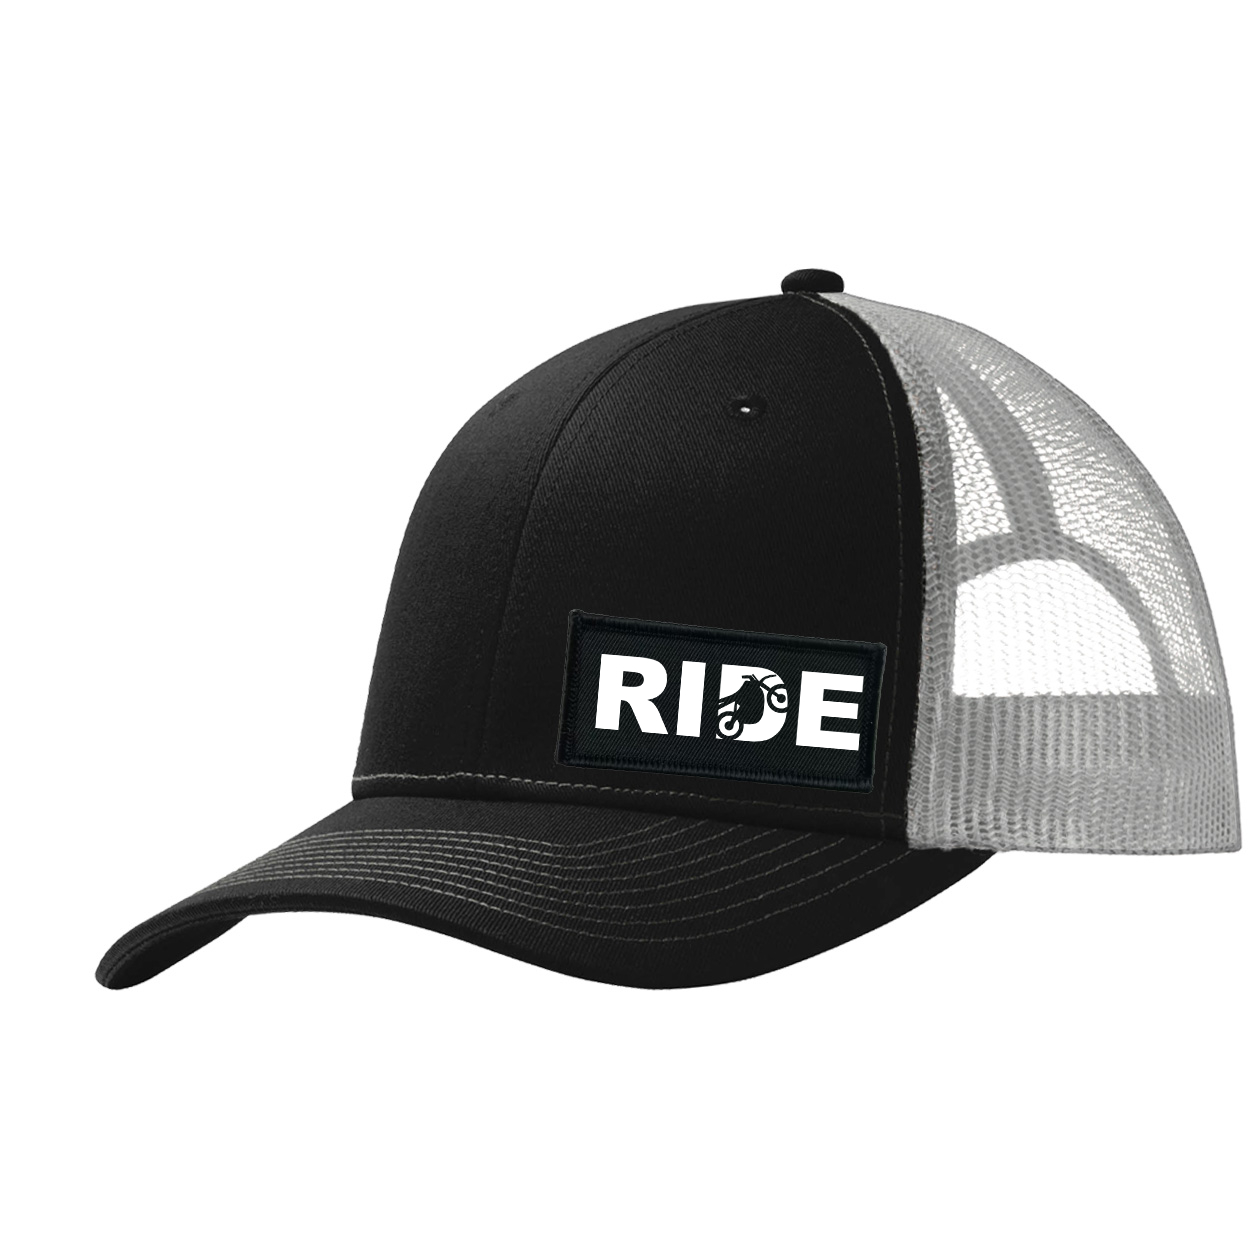 Ride Moto Logo Night Out Woven Patch Snapback Trucker Hat Black/Gray 